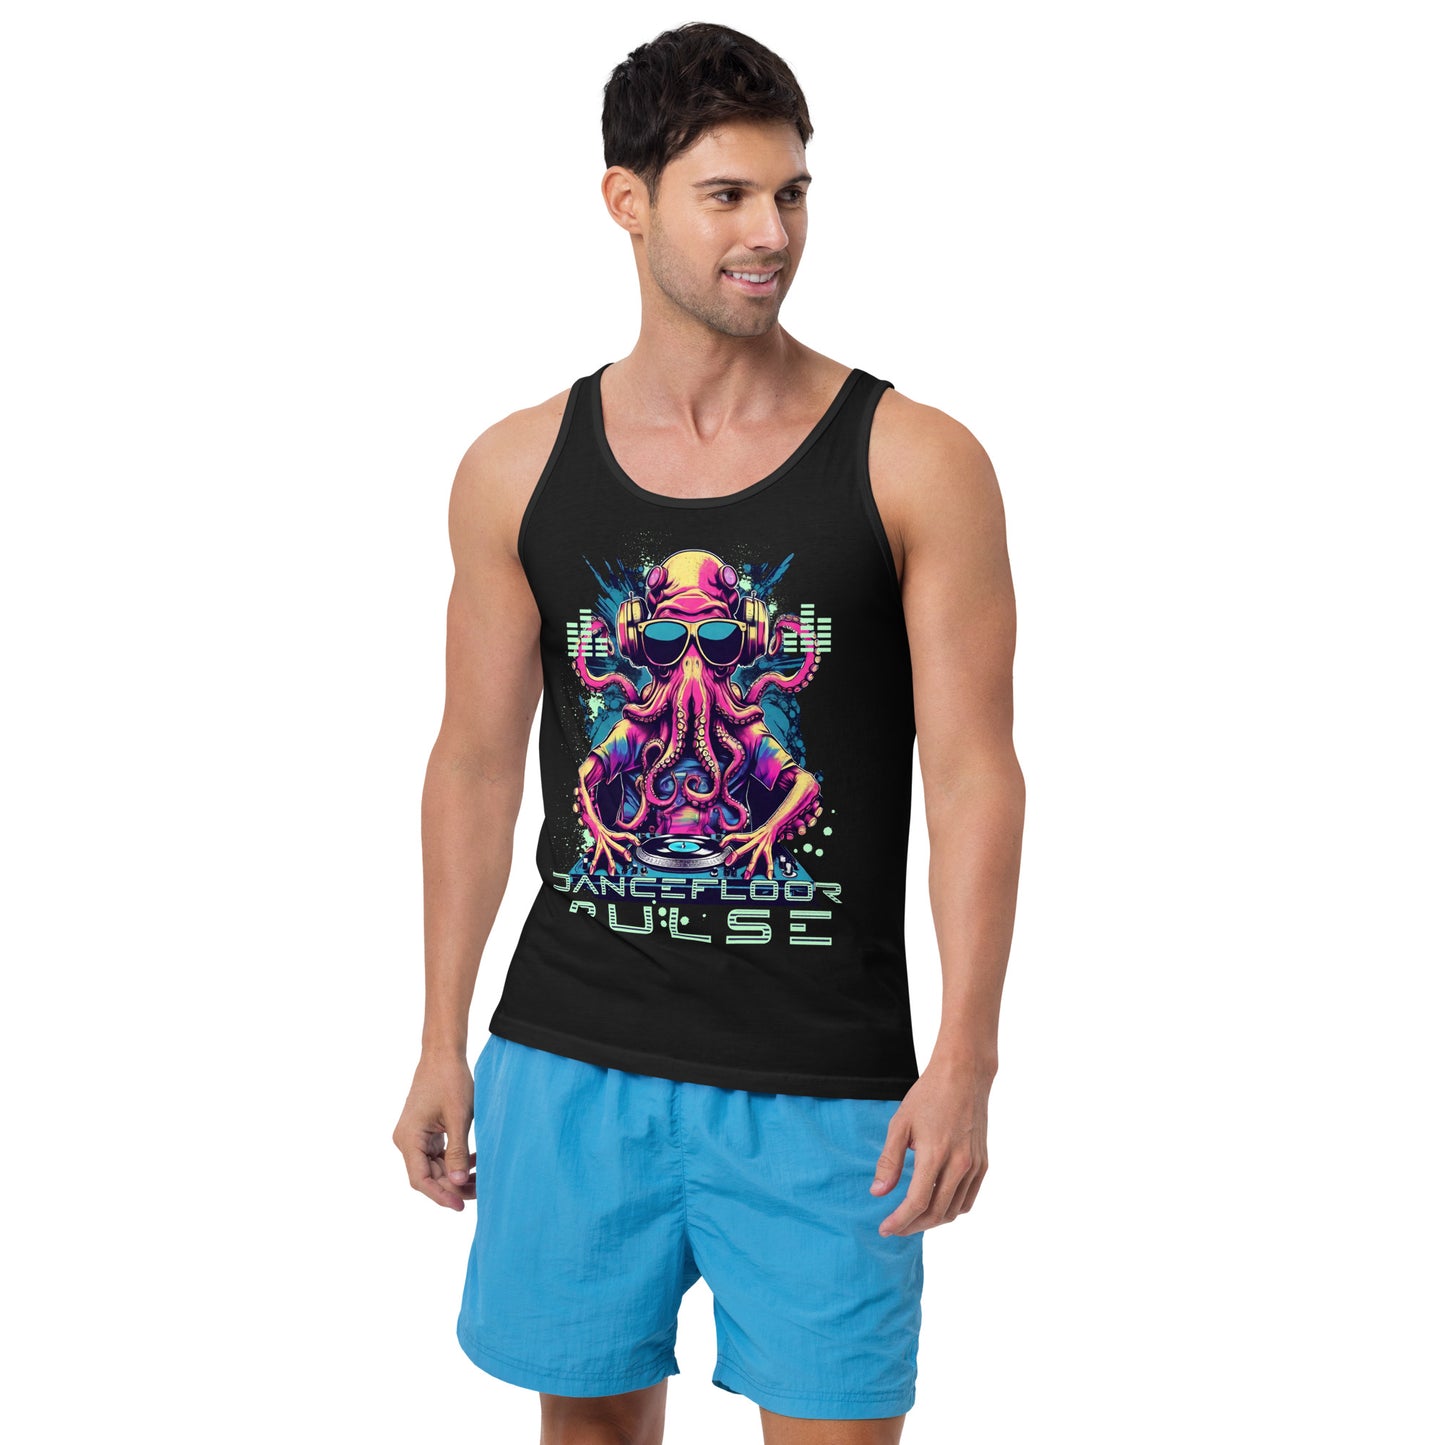 Dancefloor Pulse - Camiseta sin mangas